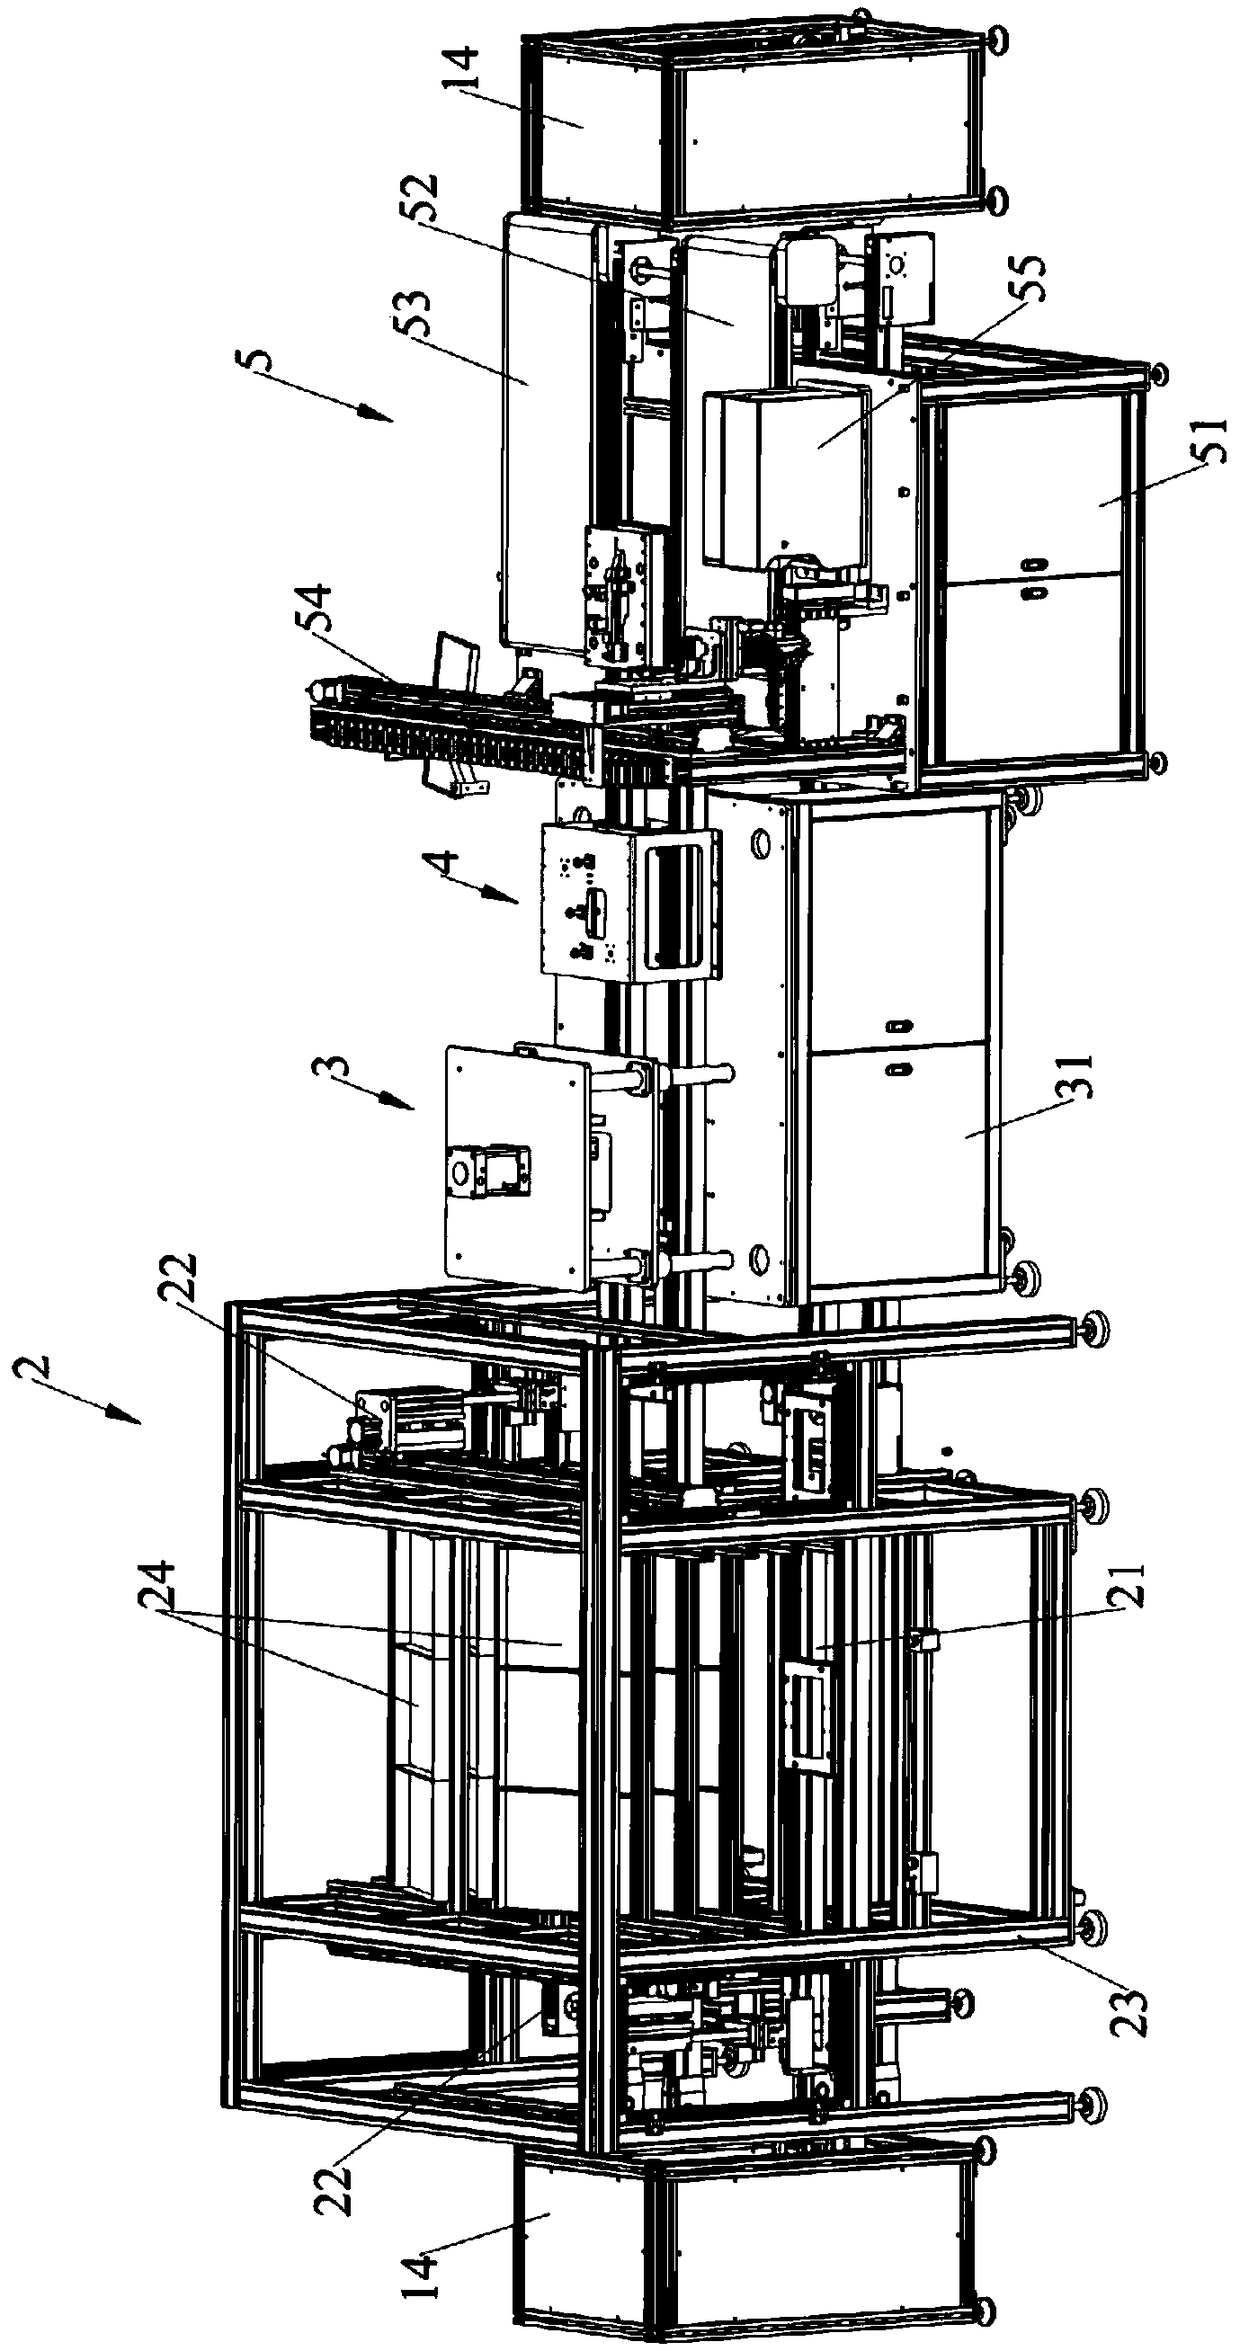 Fuse box press-mounting and testing machine